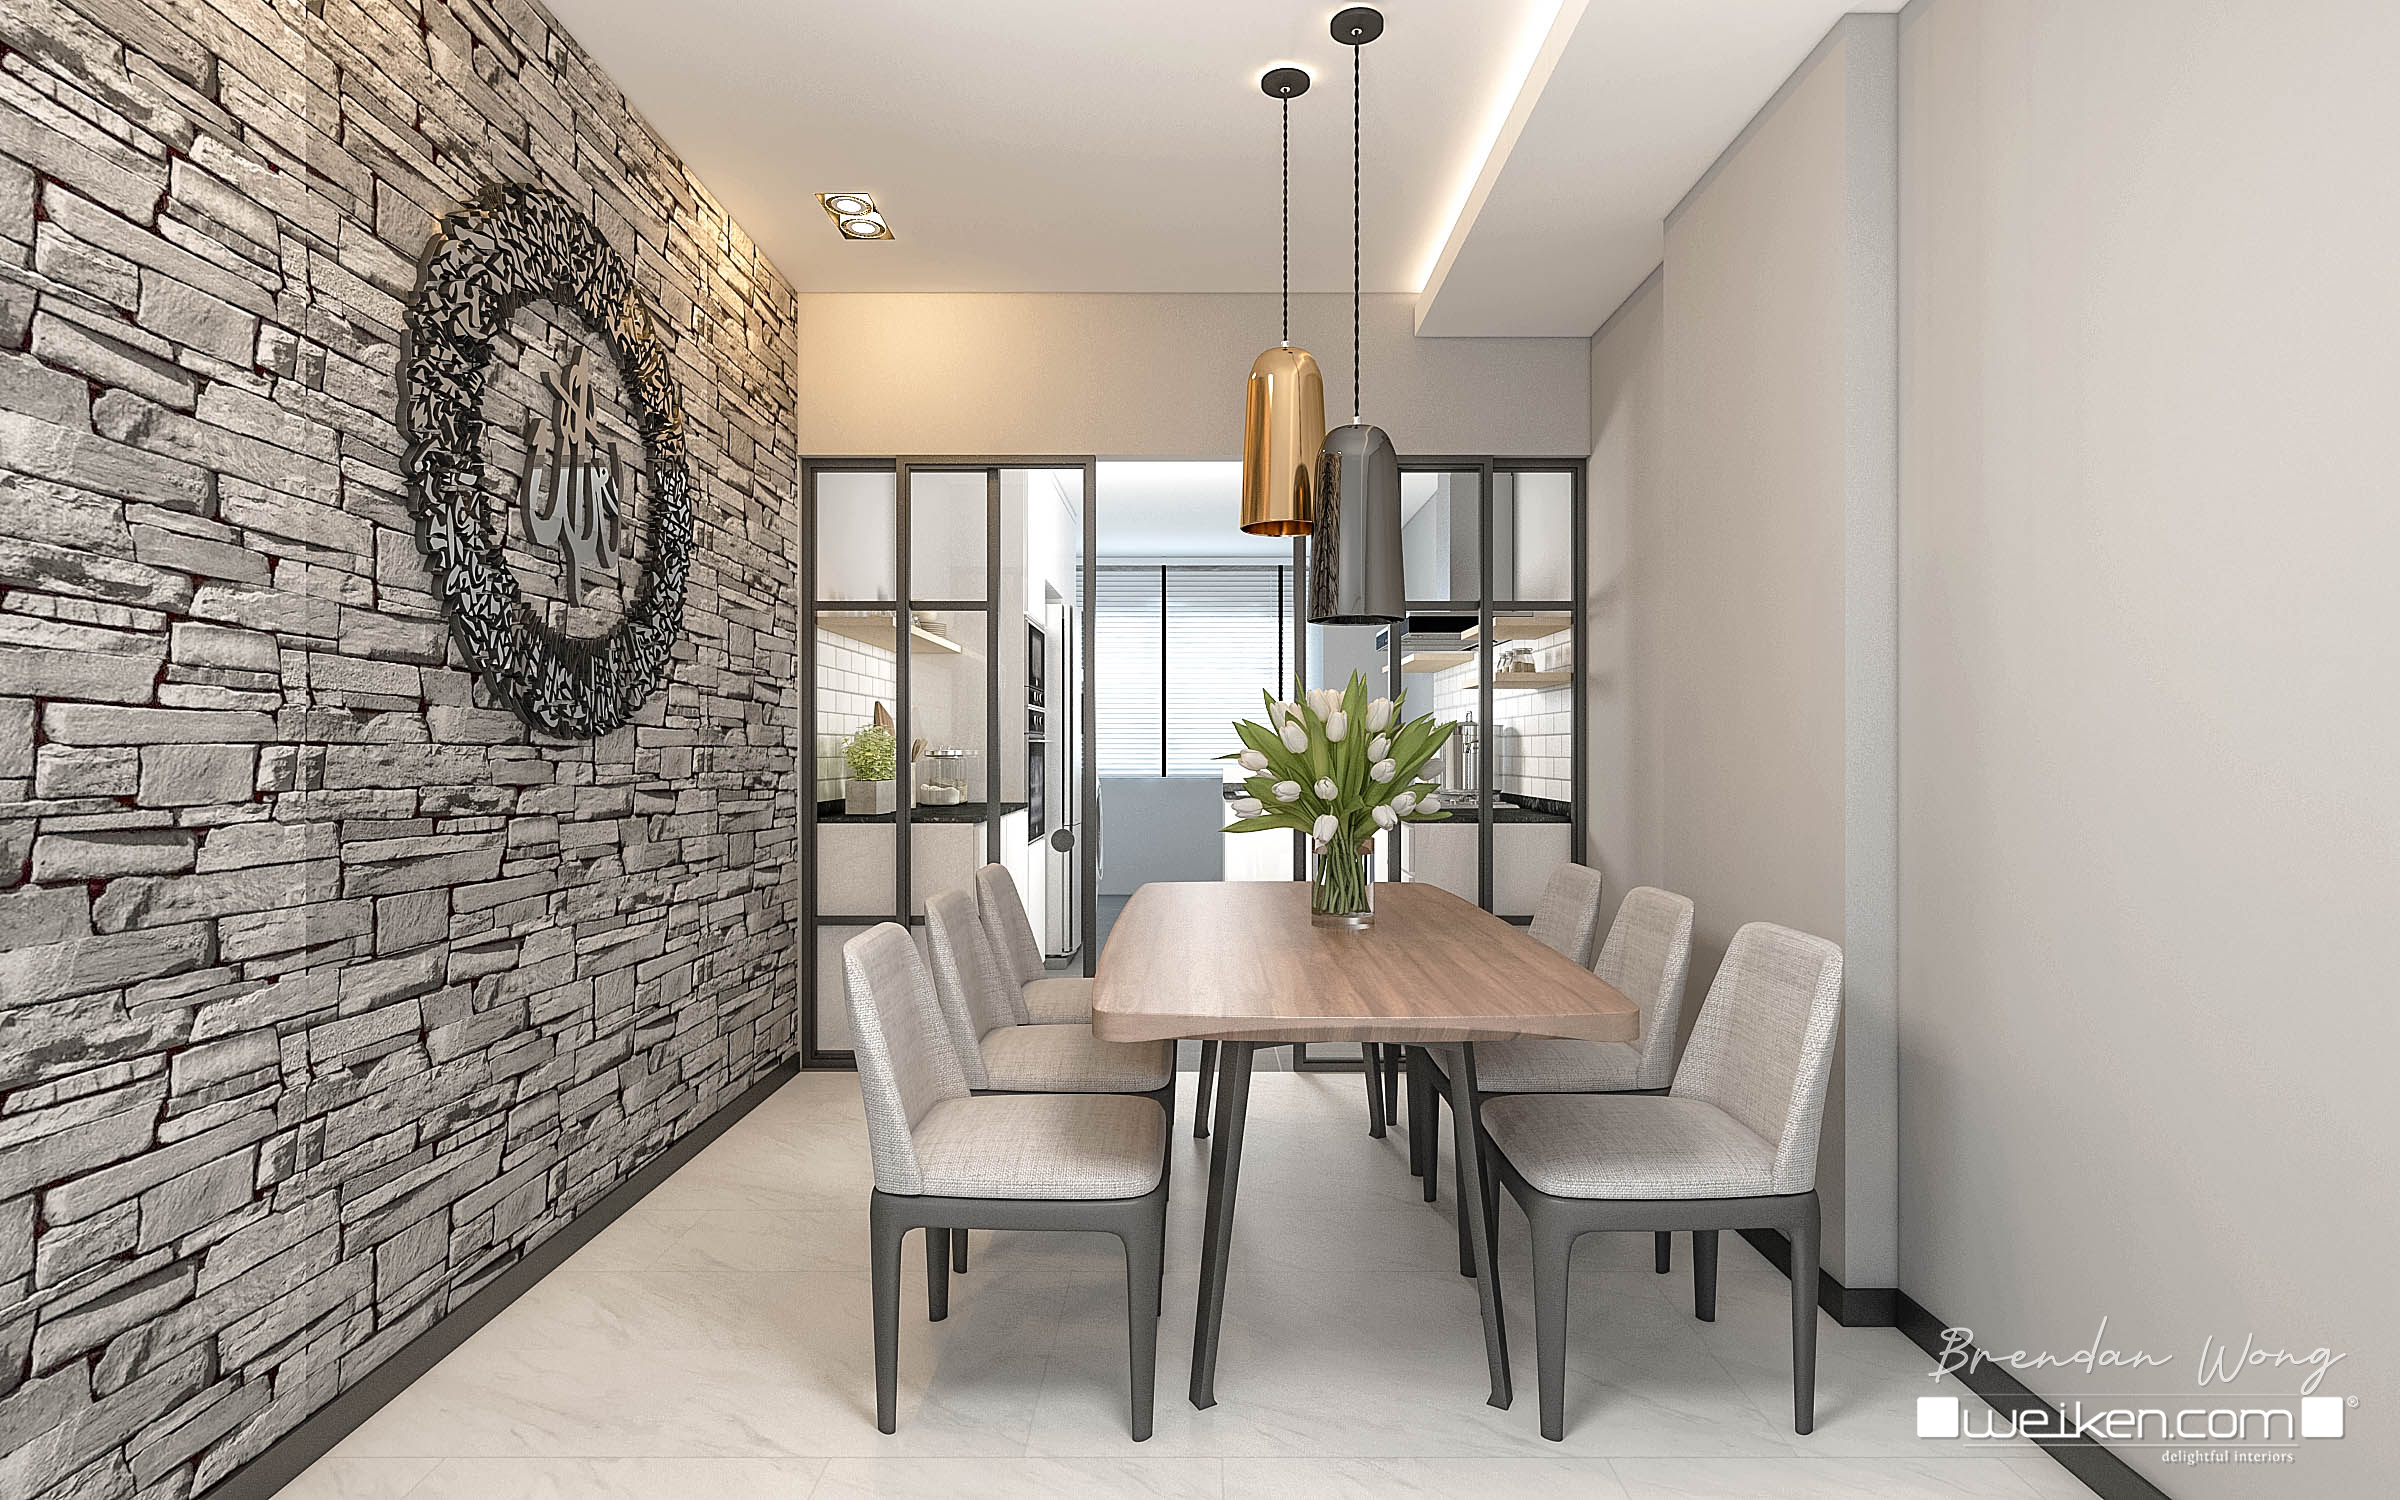 HDB 2 Room Flexi Design (Best Ideas For Your Flexi Flat Design 2021) Weiken Interior Design